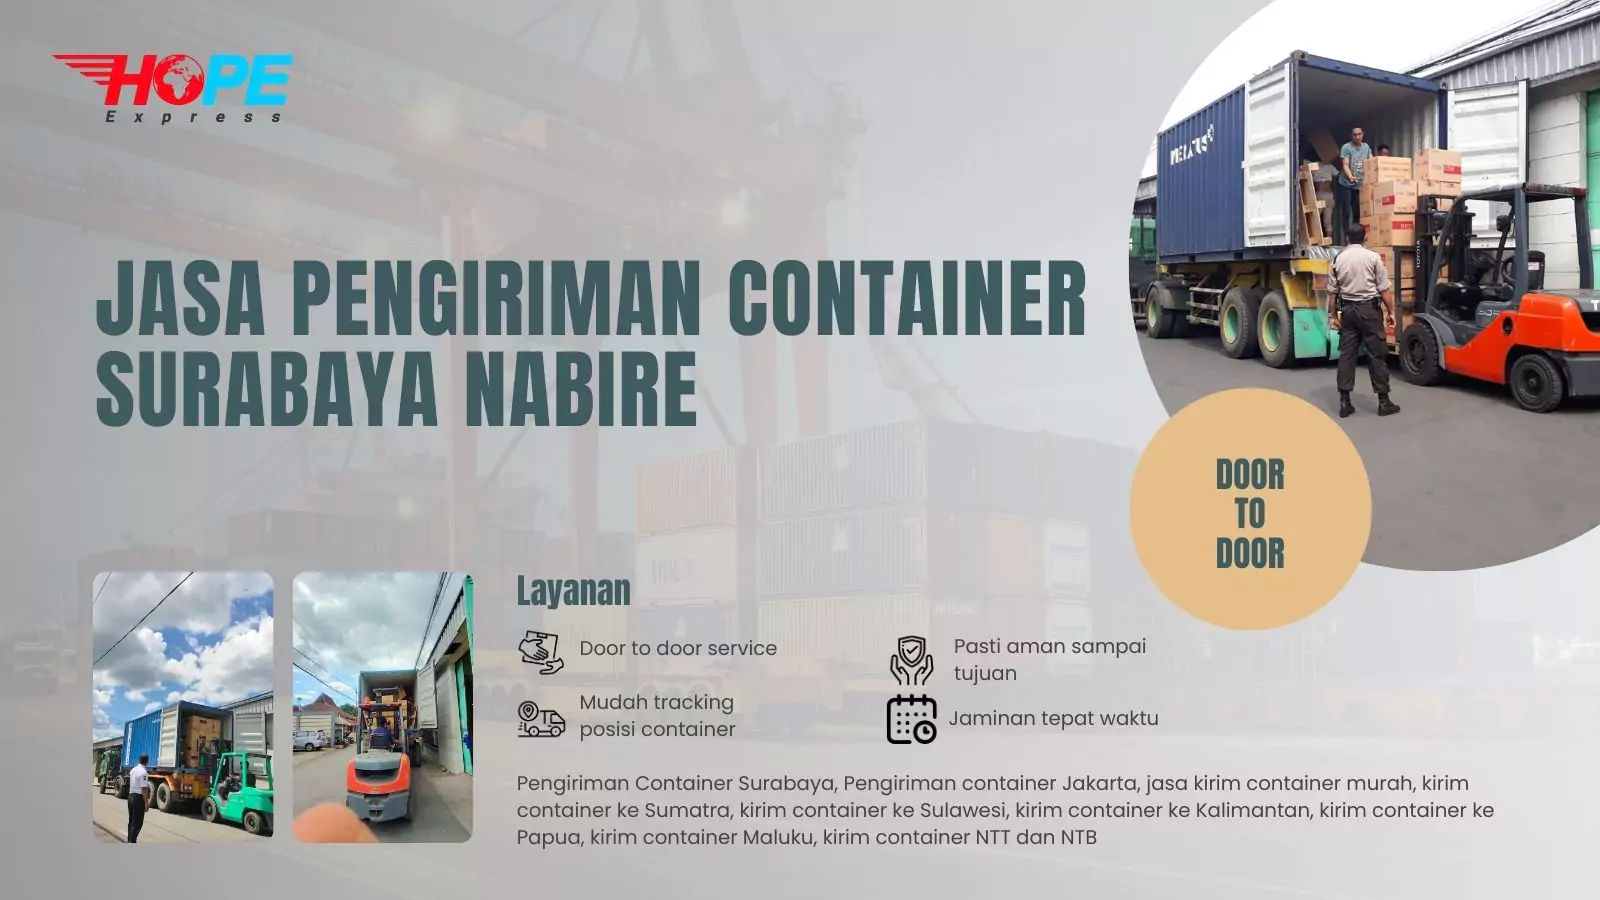 Jasa Pengiriman Container Surabaya Nabire